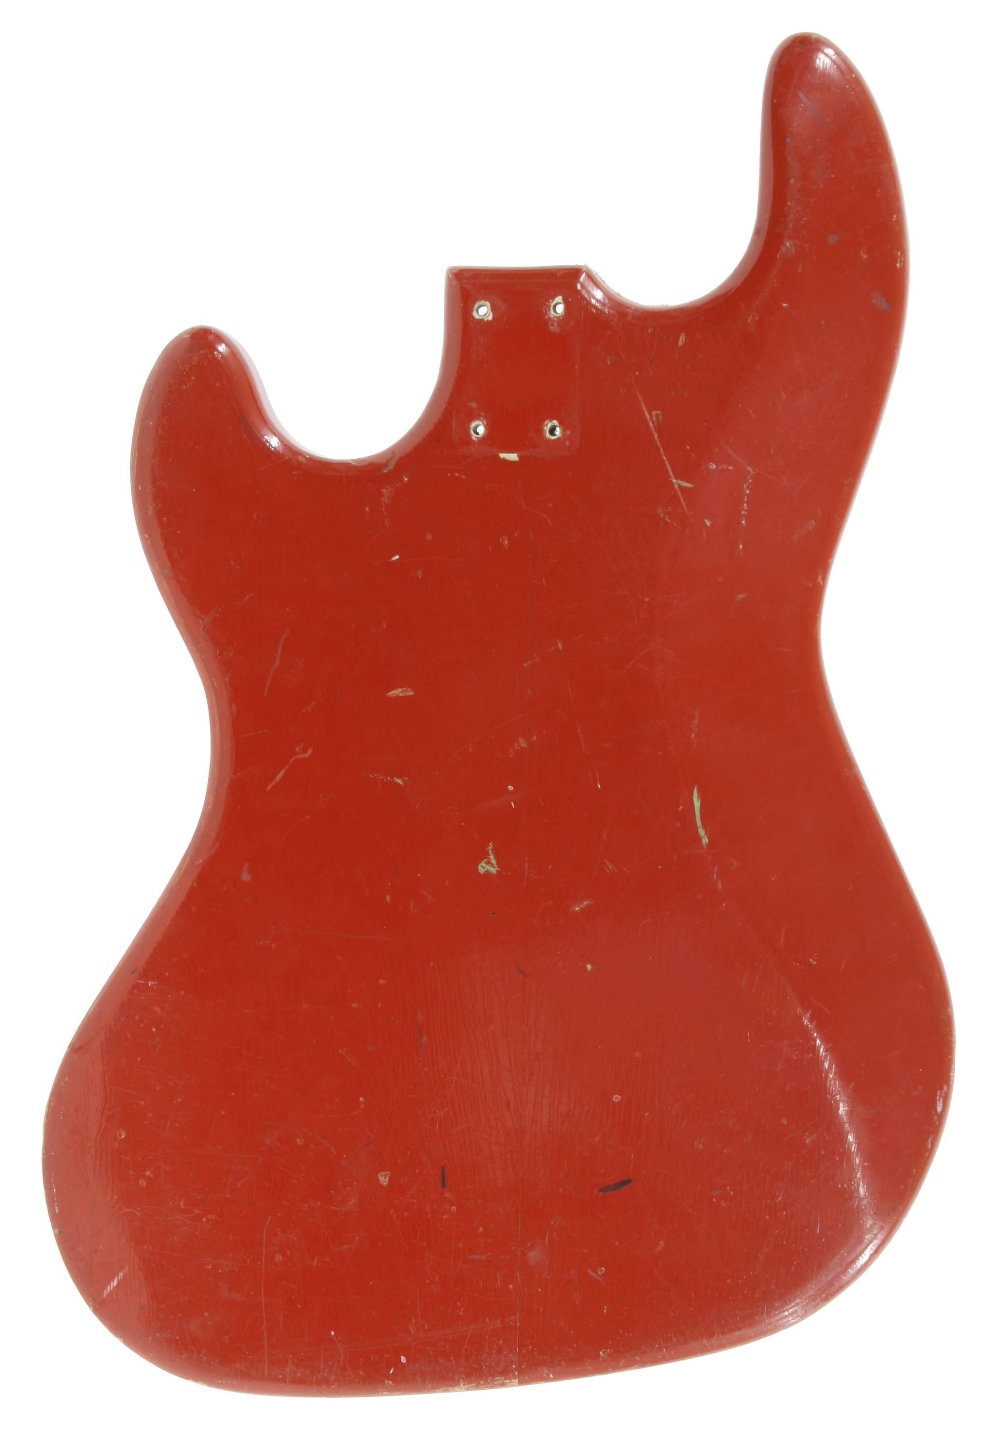 1960s Hofner bass guitar body - Image 2 of 2